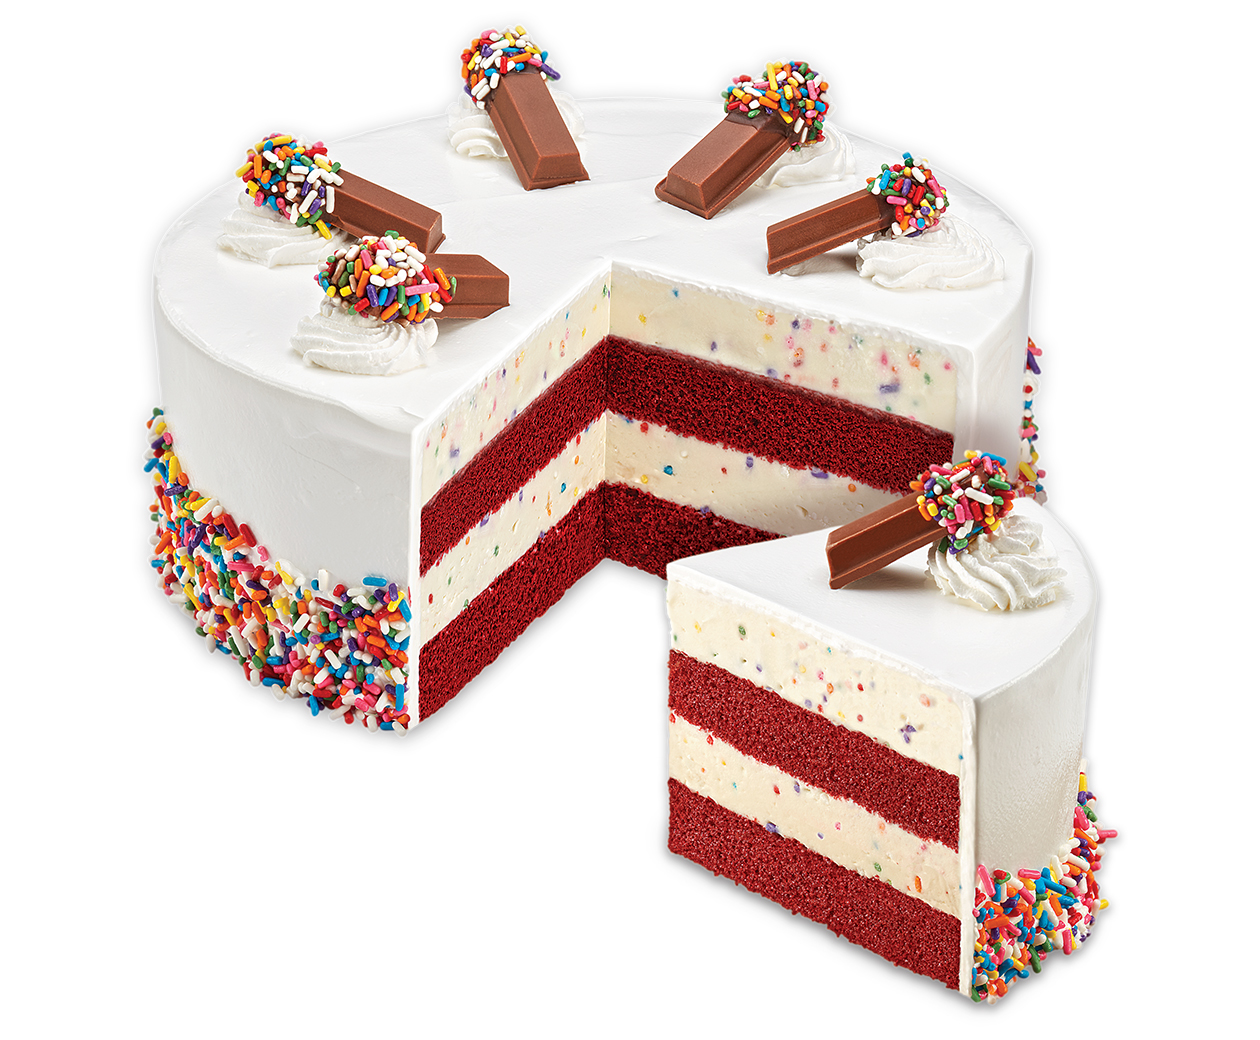 Carvel Family-Sized Confetti Ice Cream Cake | I Love Ice Cream Cakes